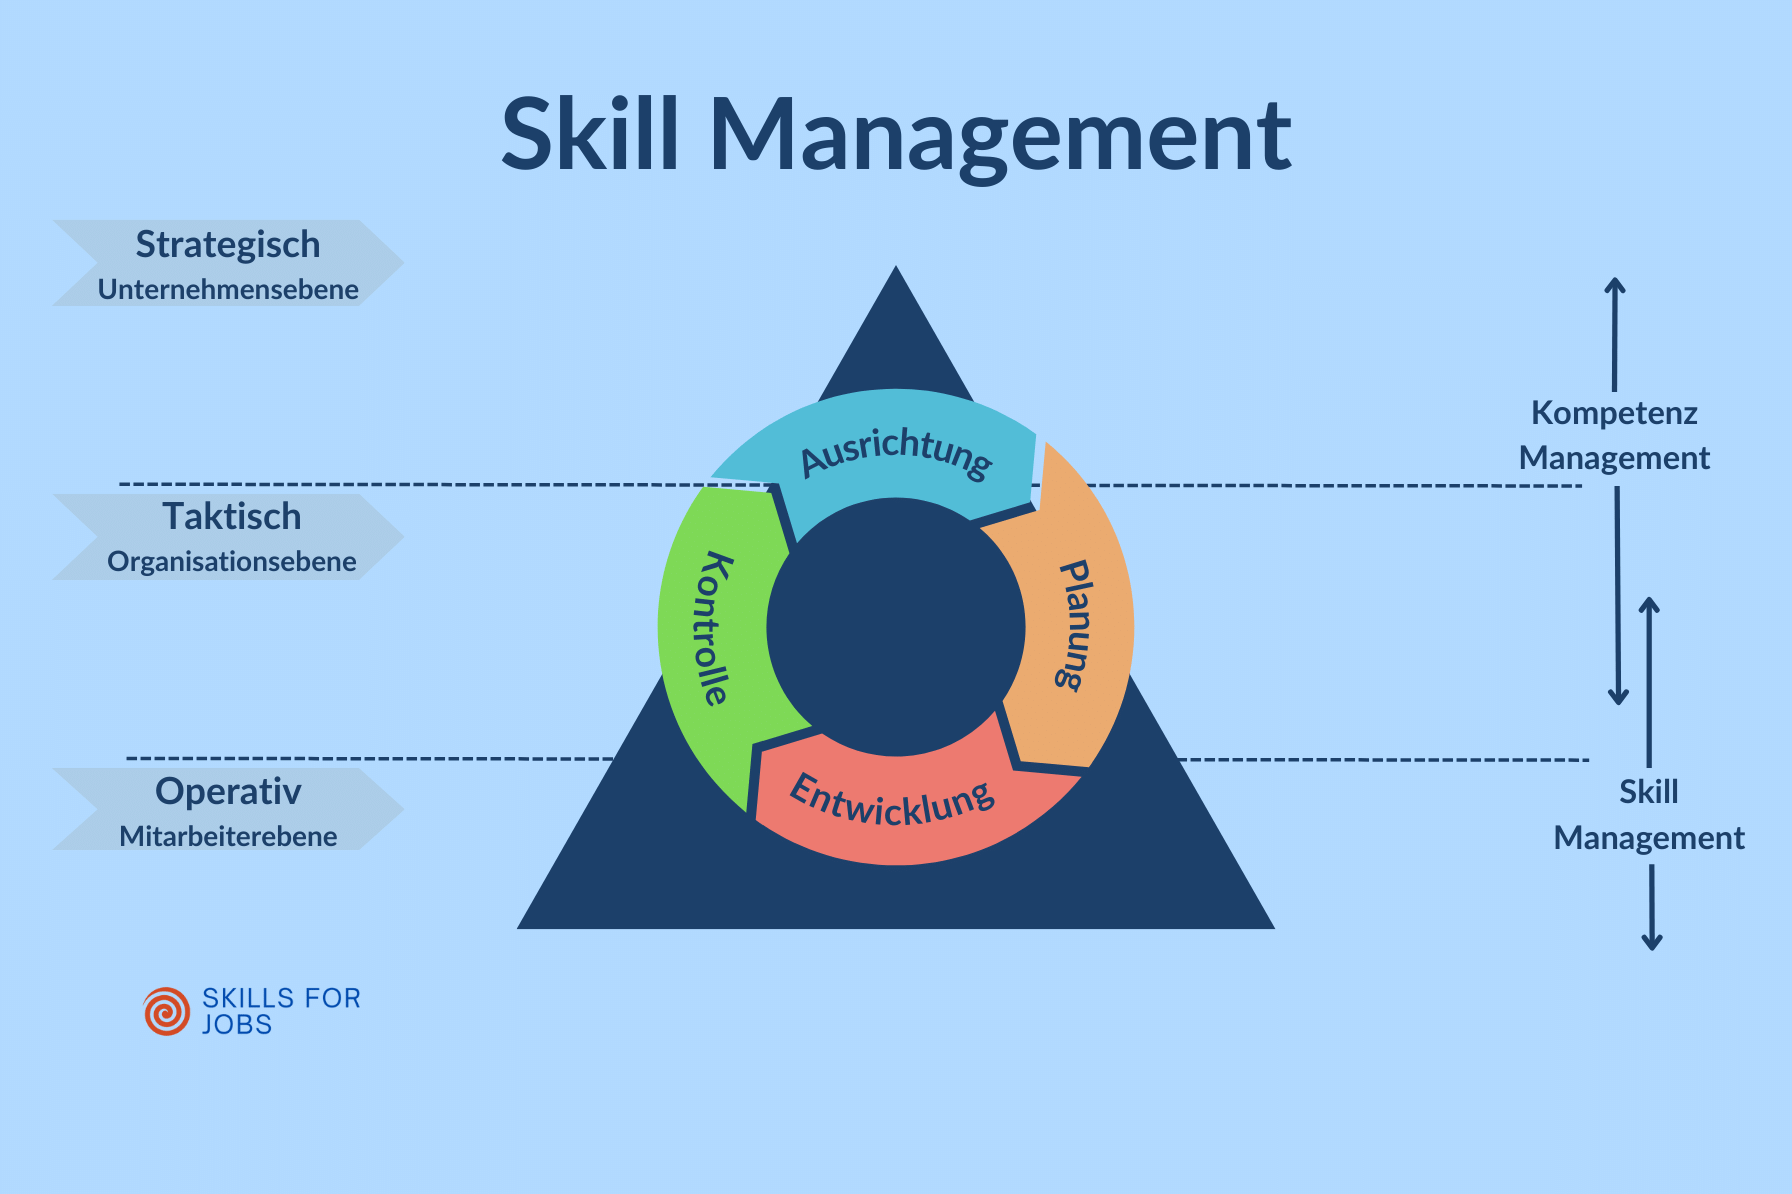 Skill Management